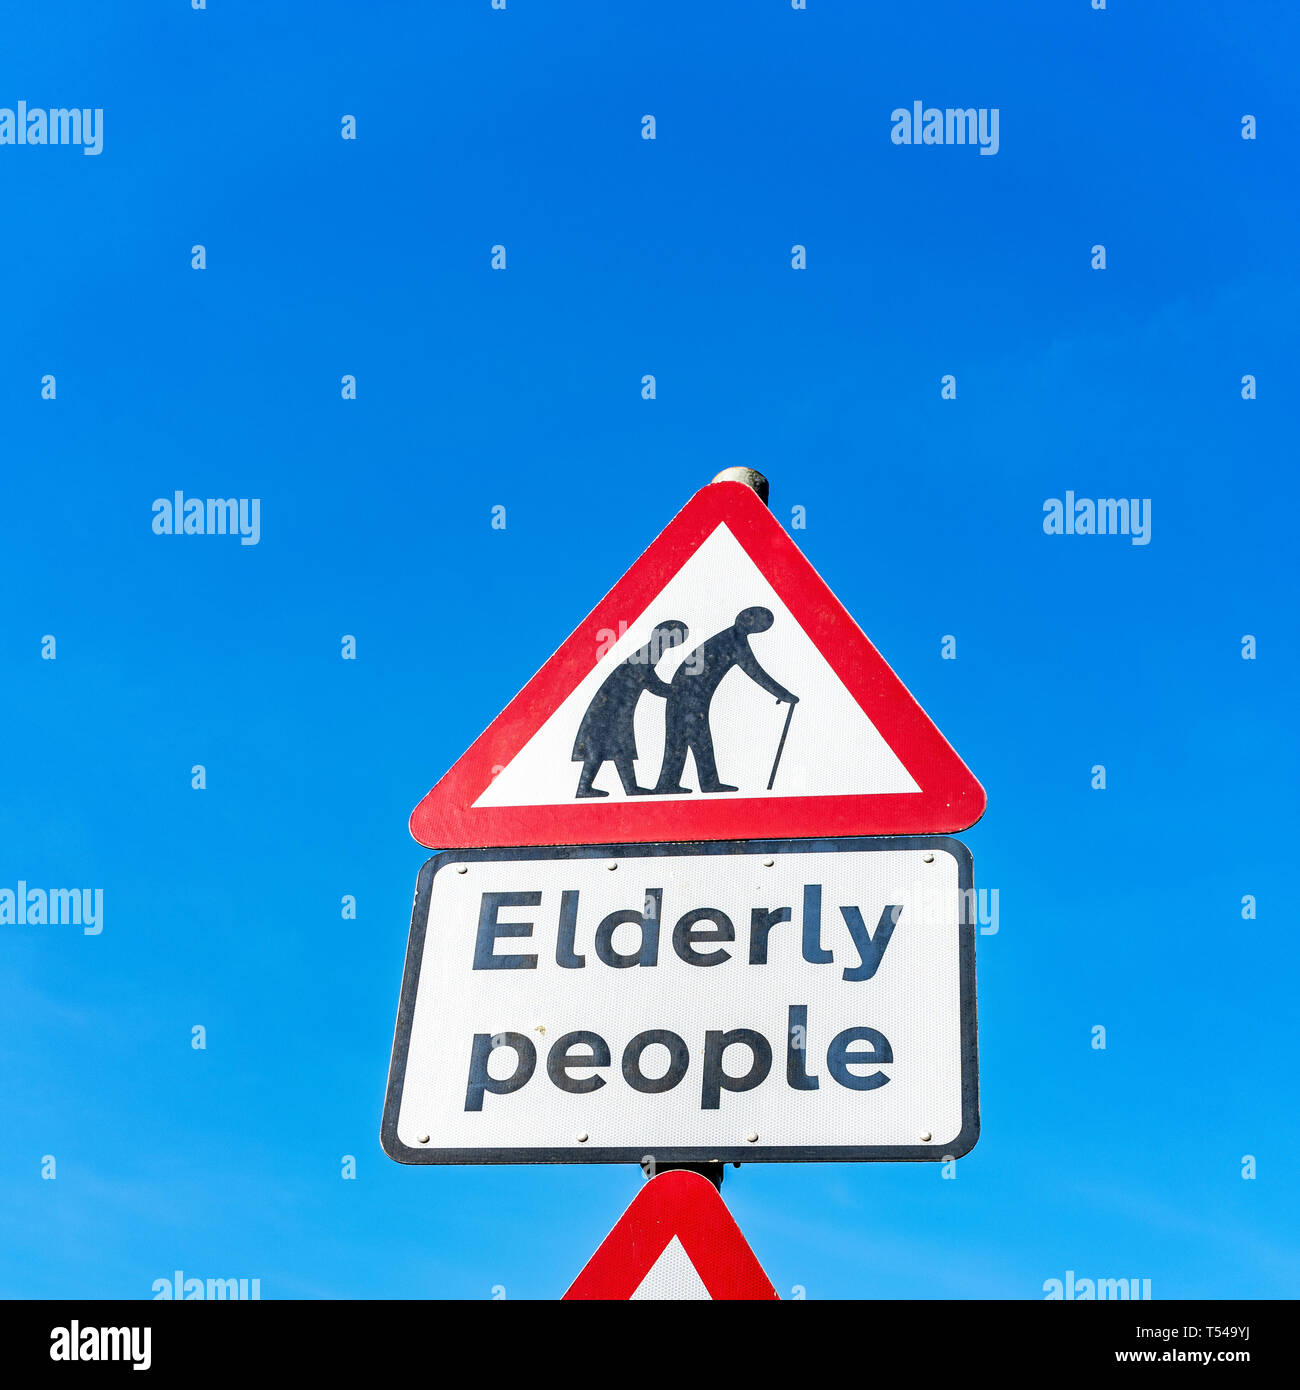 Elderly people road sign Stock Photo